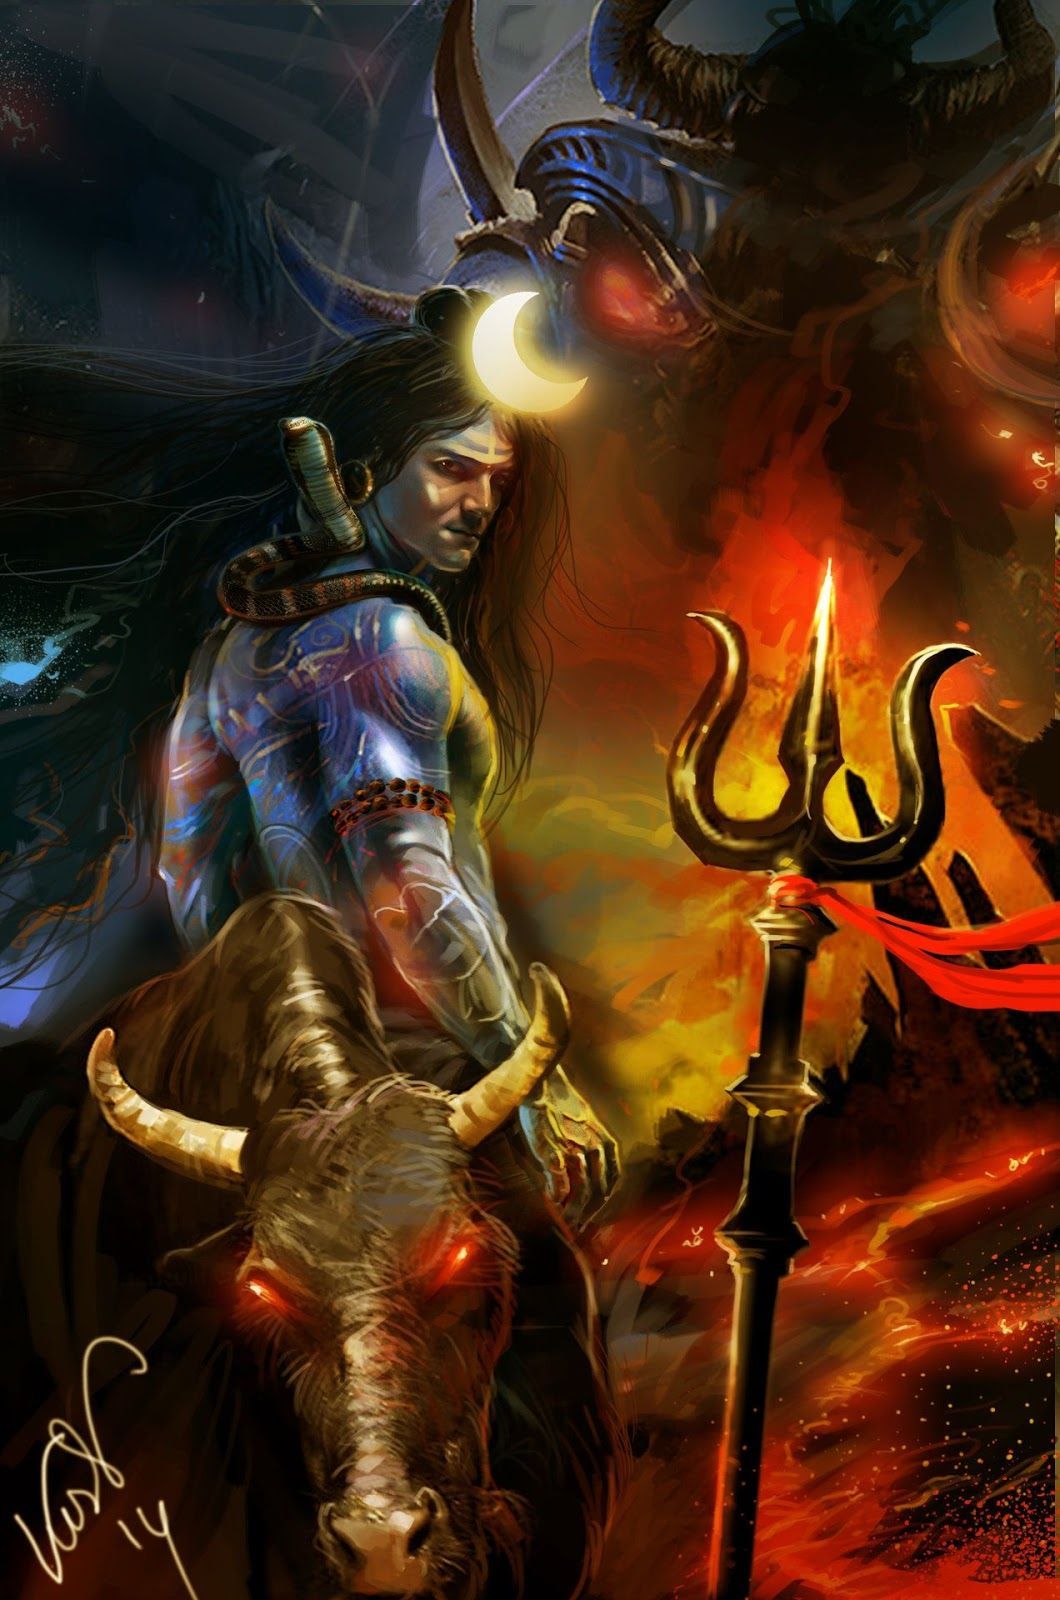 Lord Shiva Angry HD Wallpaper 1080p Download For Desktop (2020) Mahadev Animated Image. Good Morning Image 2020